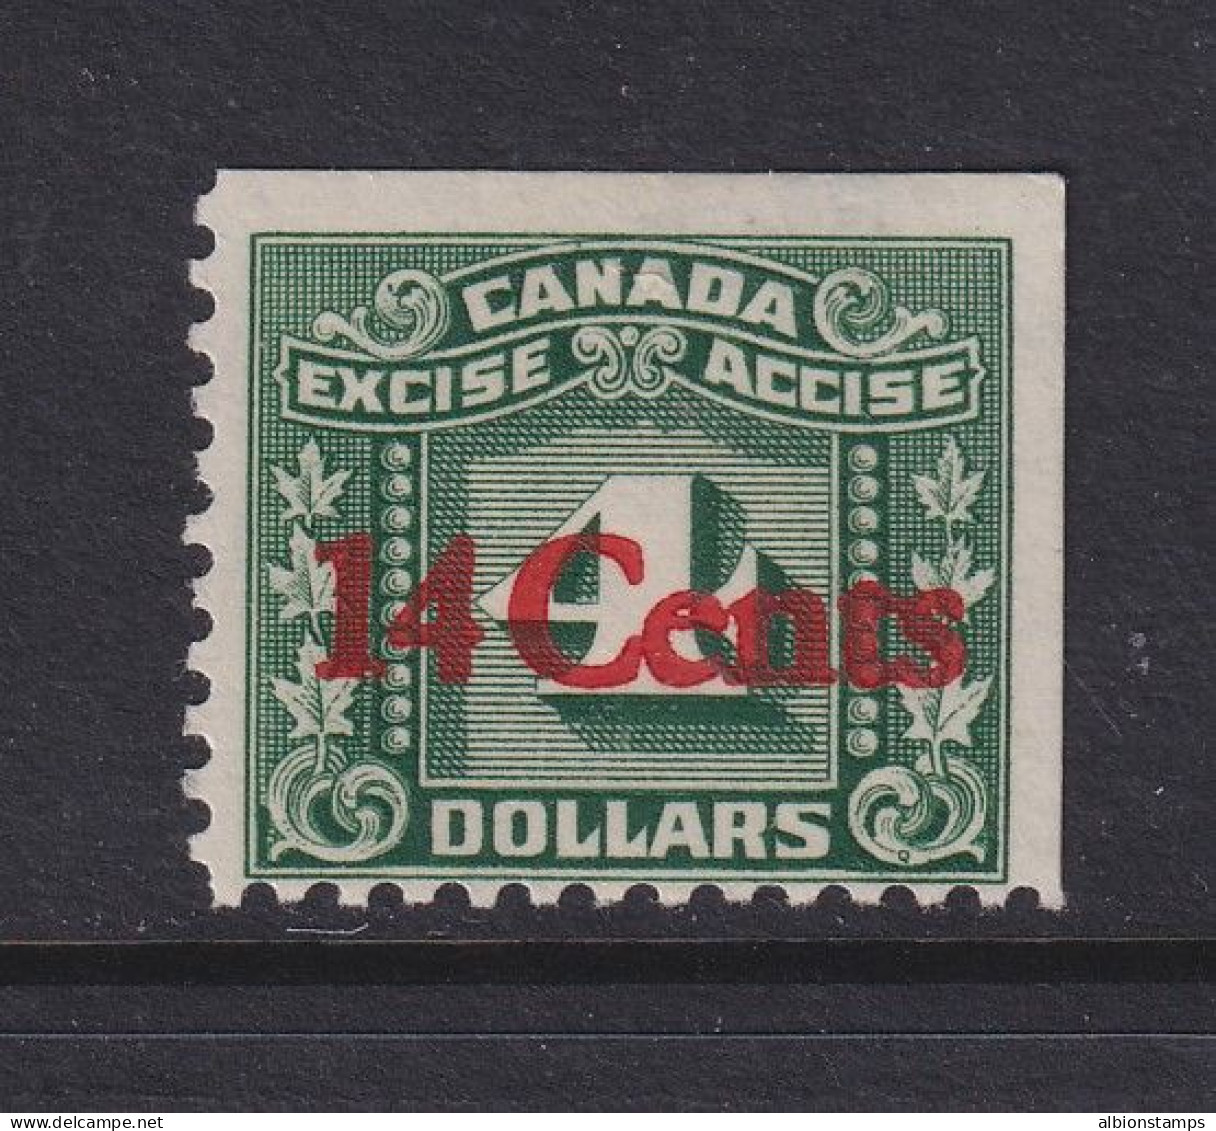 Canada Revenue (Federal), Van Dam FX125, MLH (overprint Offset On Back) - Fiscale Zegels